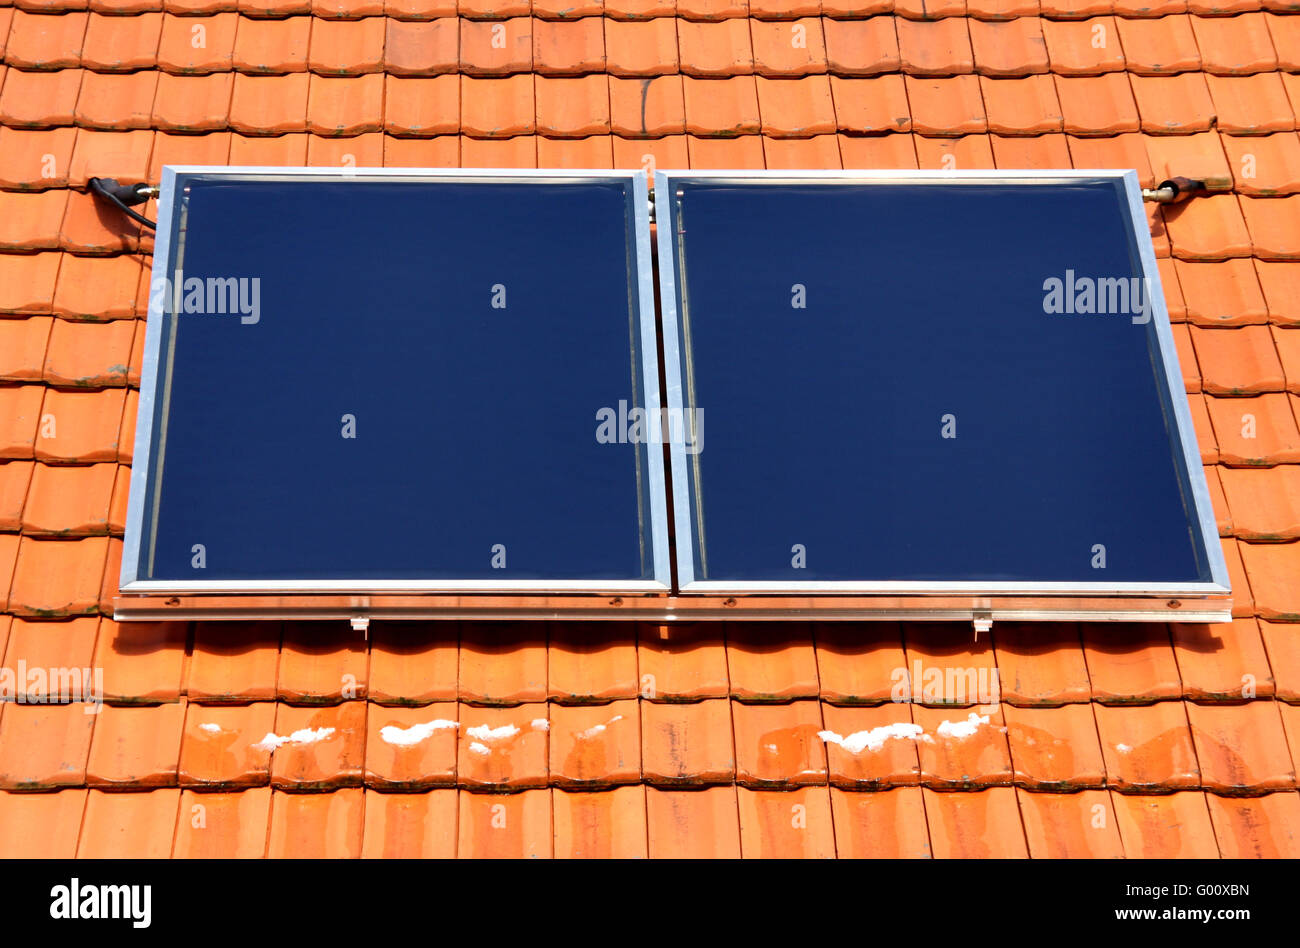 Solar cells Stock Photo